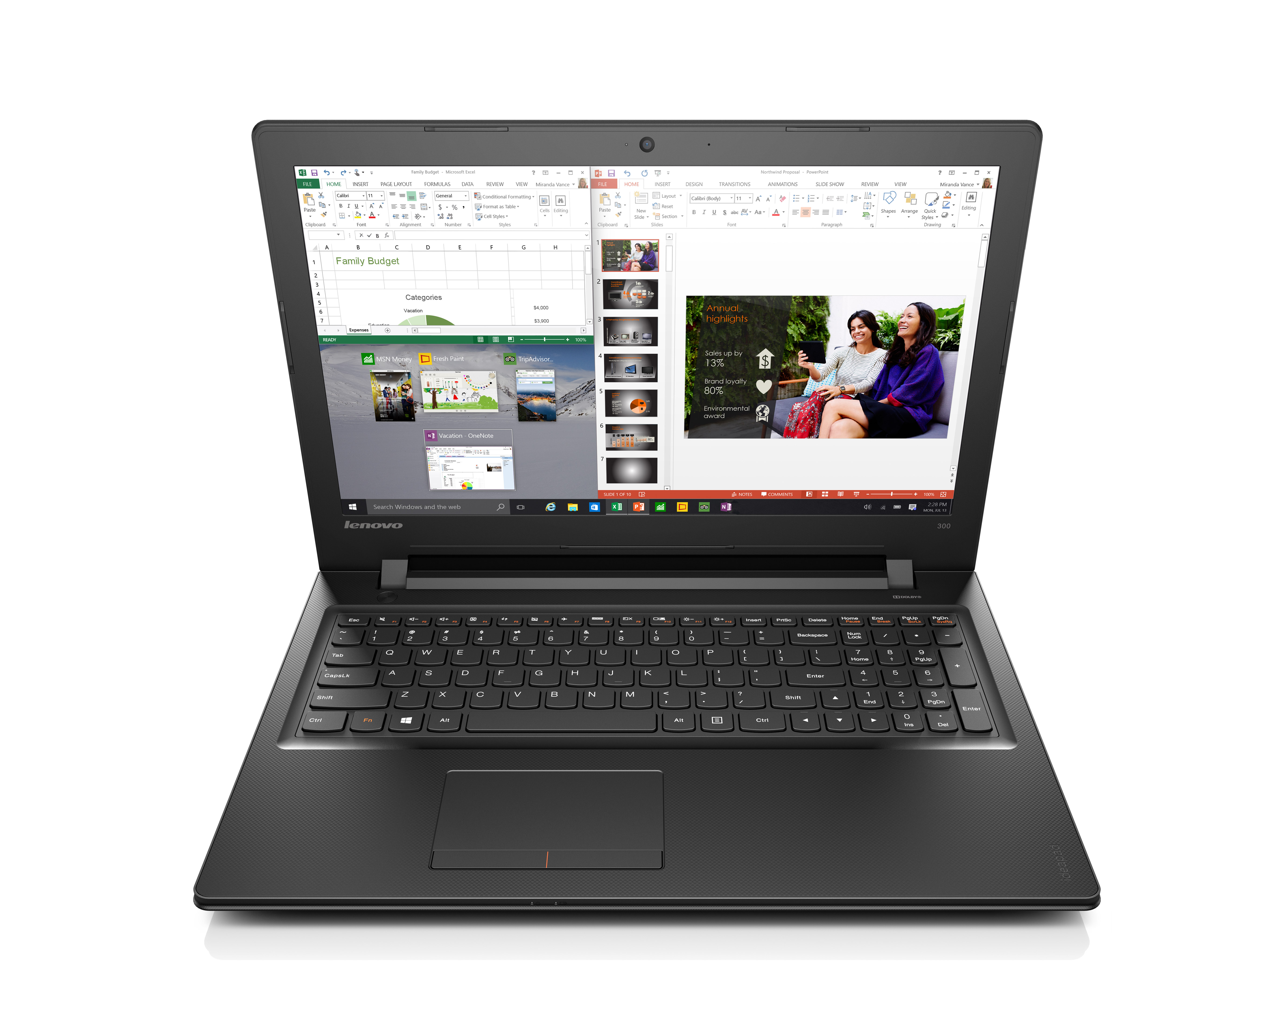 Lenovo Ideapad 300 15ibr Notebook Review Notebookcheck Net Reviews